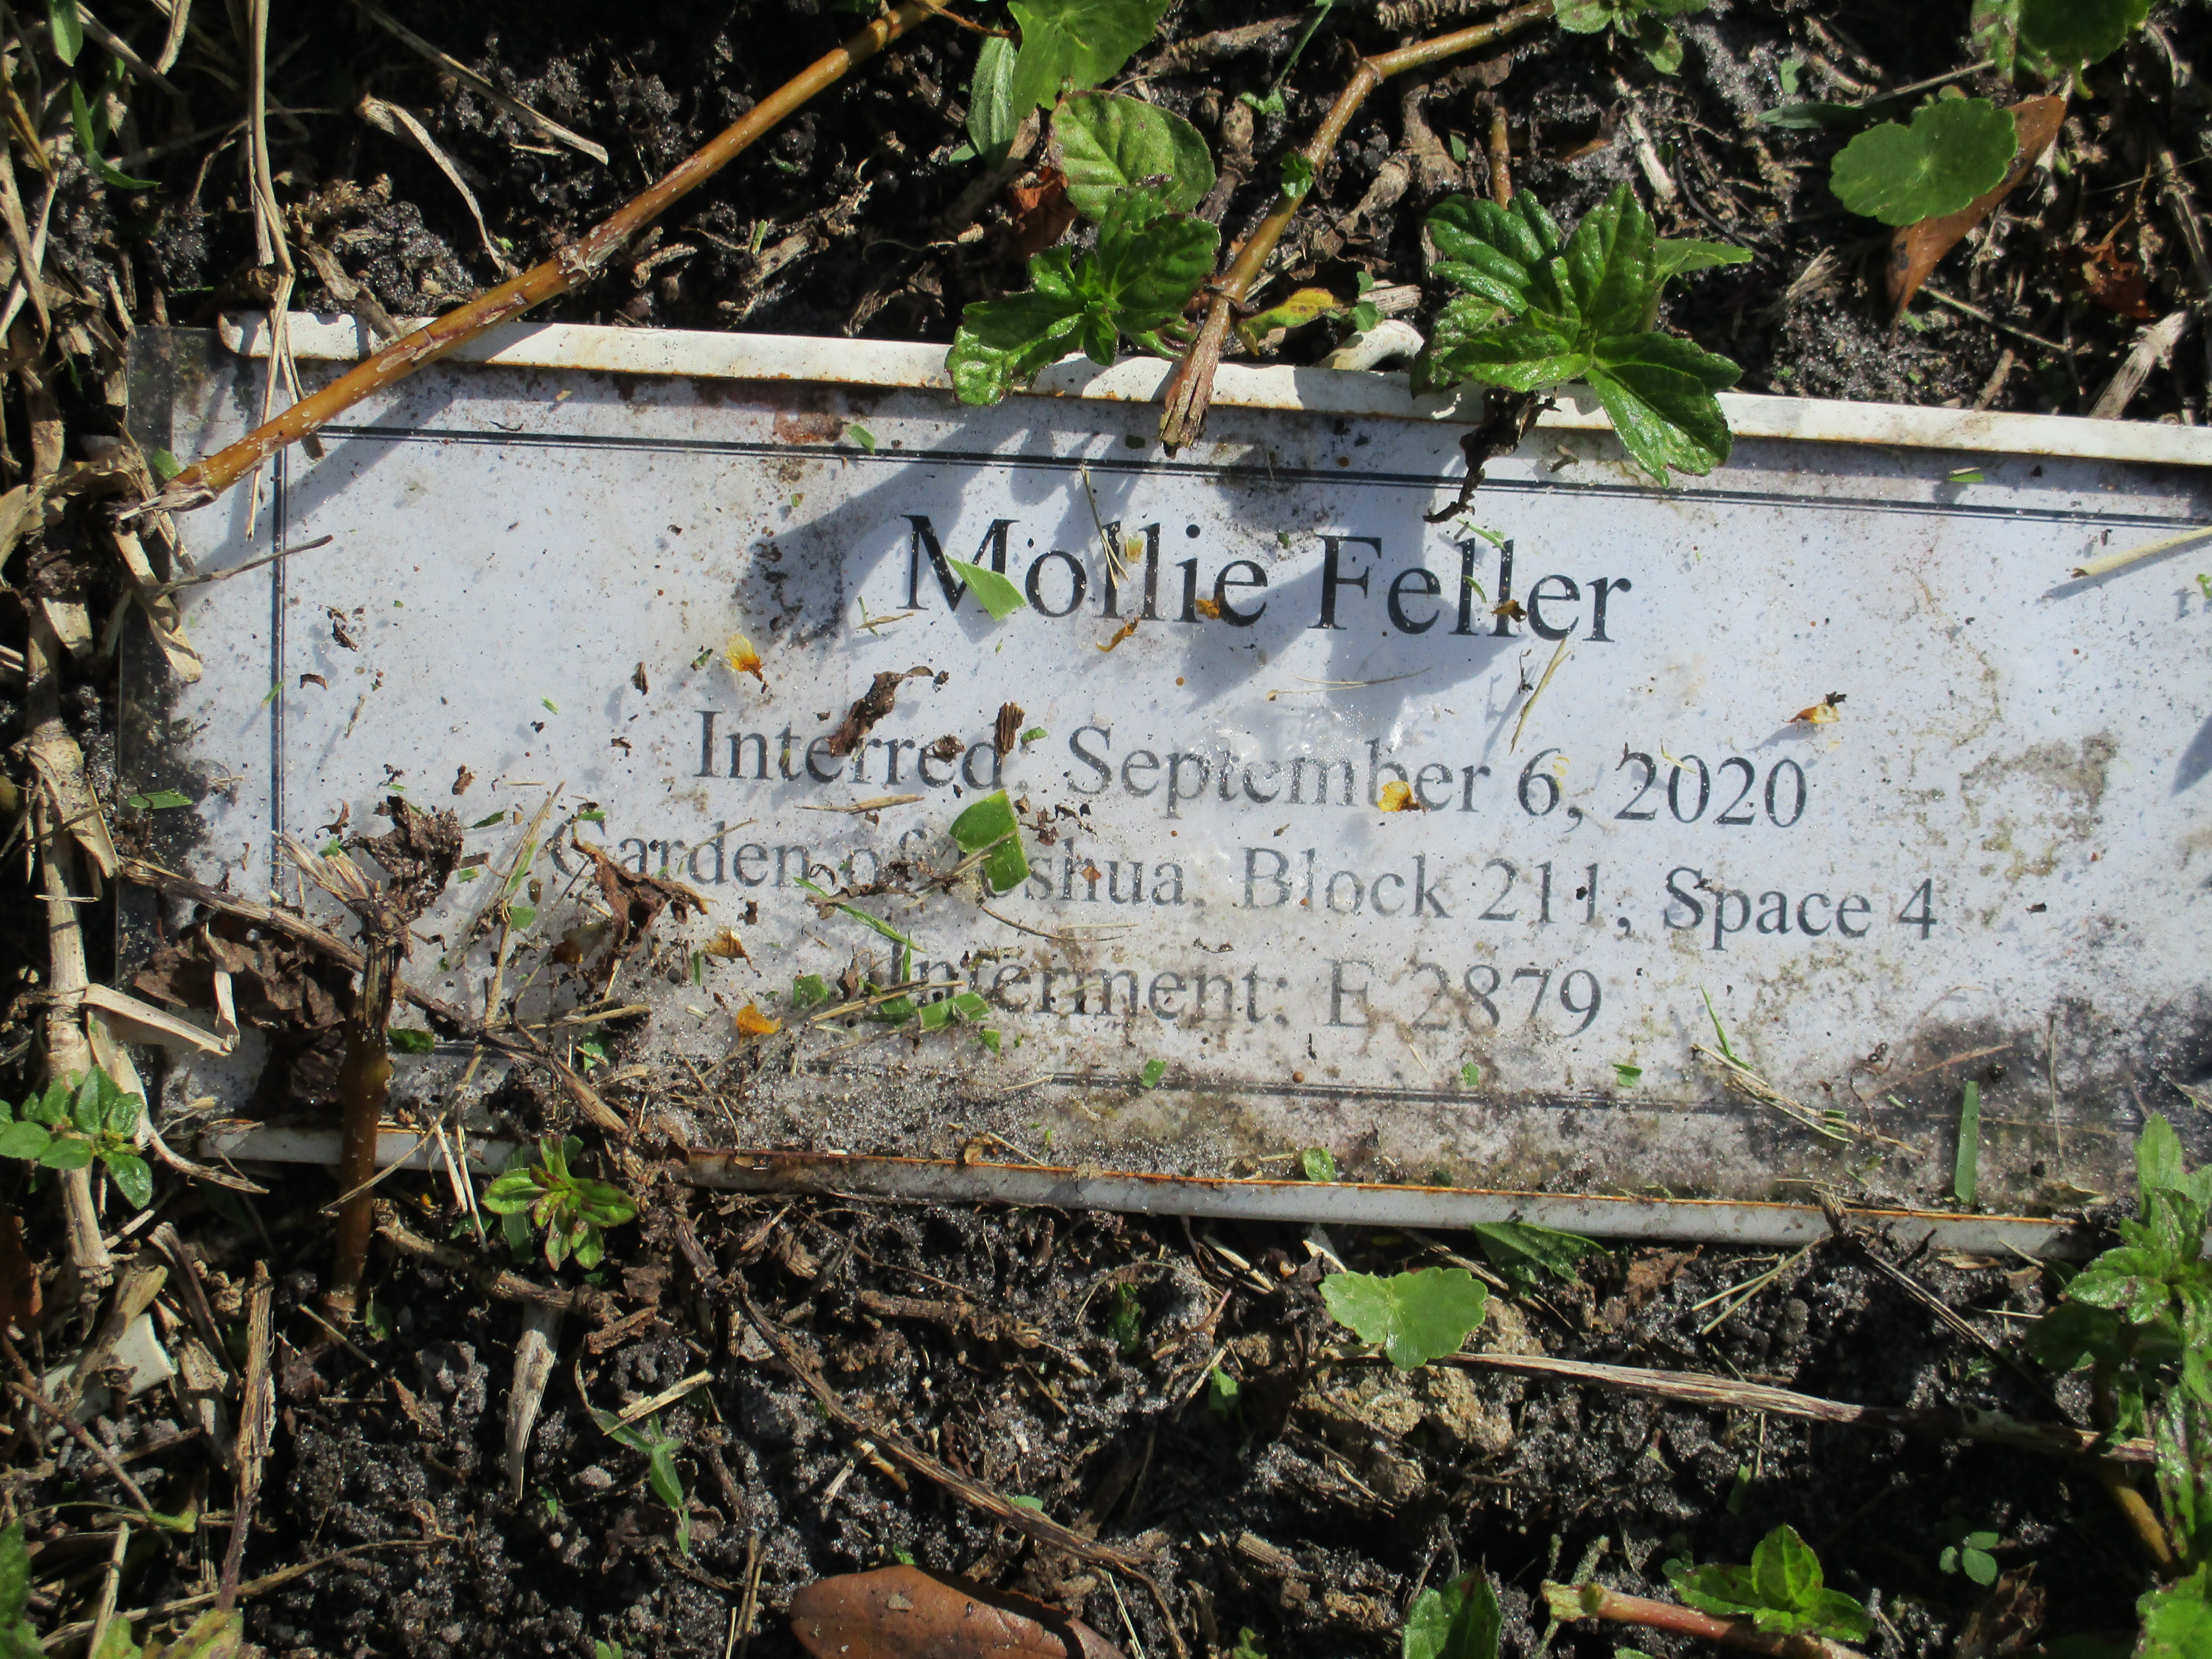 Mollie Feller